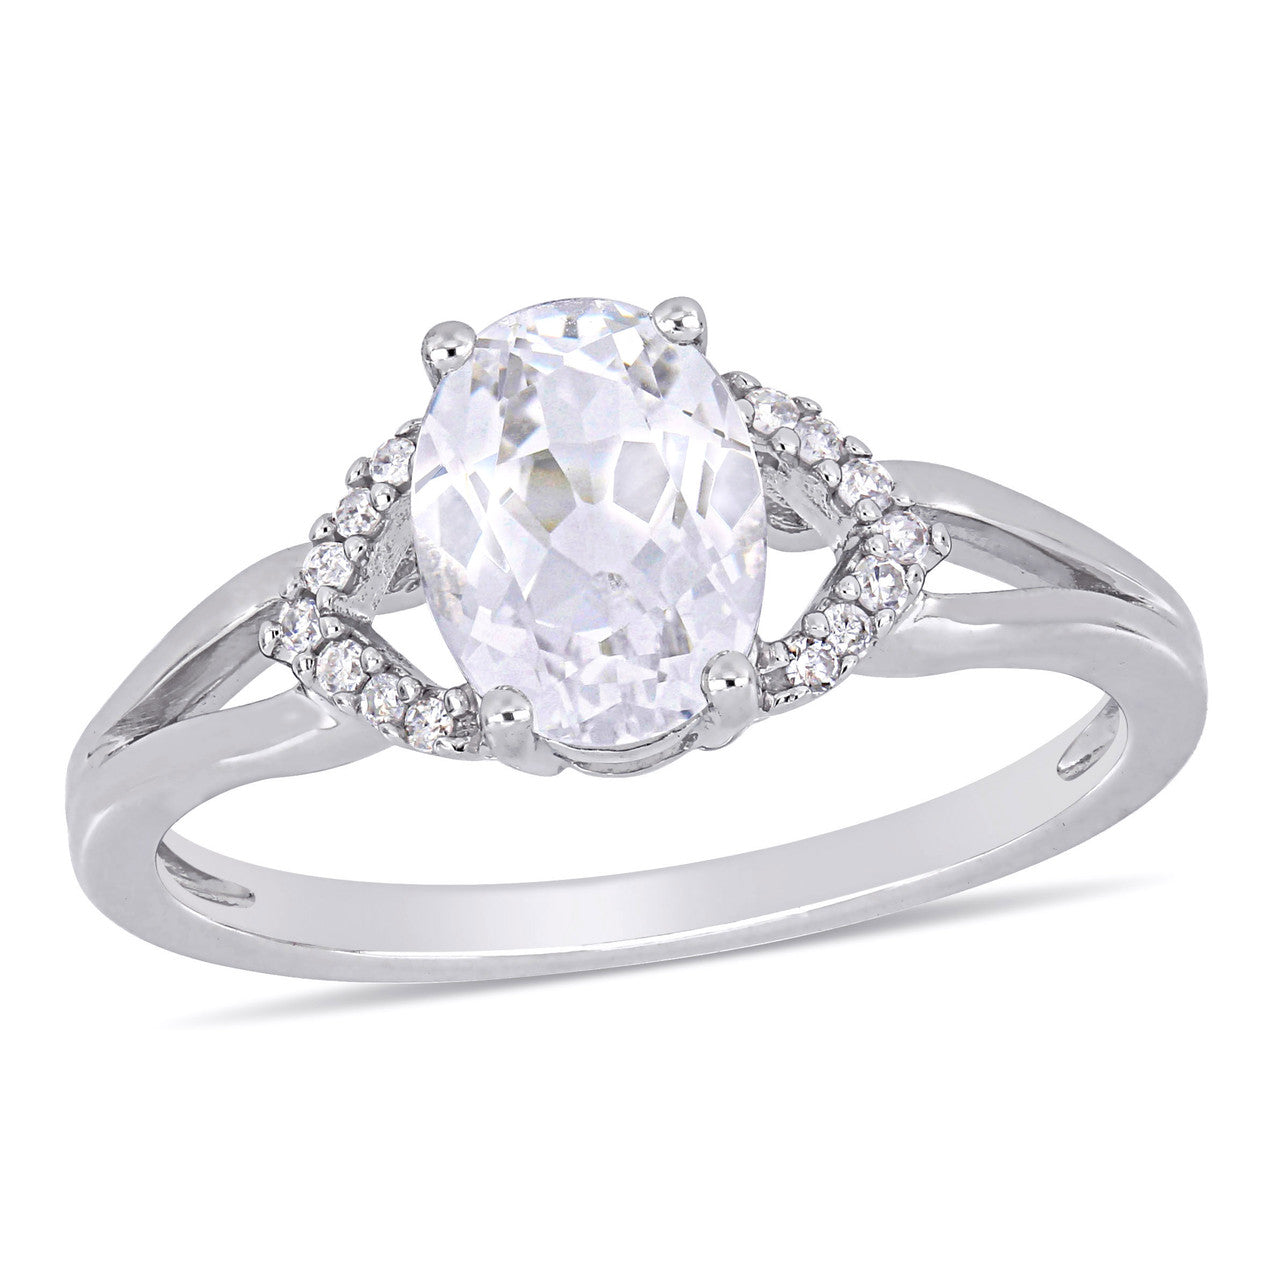 Ice Jewellery 0.06 CT Diamond TW and 2 CT TGW Created White Sapphire Ring in 10k White Gold - 75000004673 | Ice Jewellery Australia